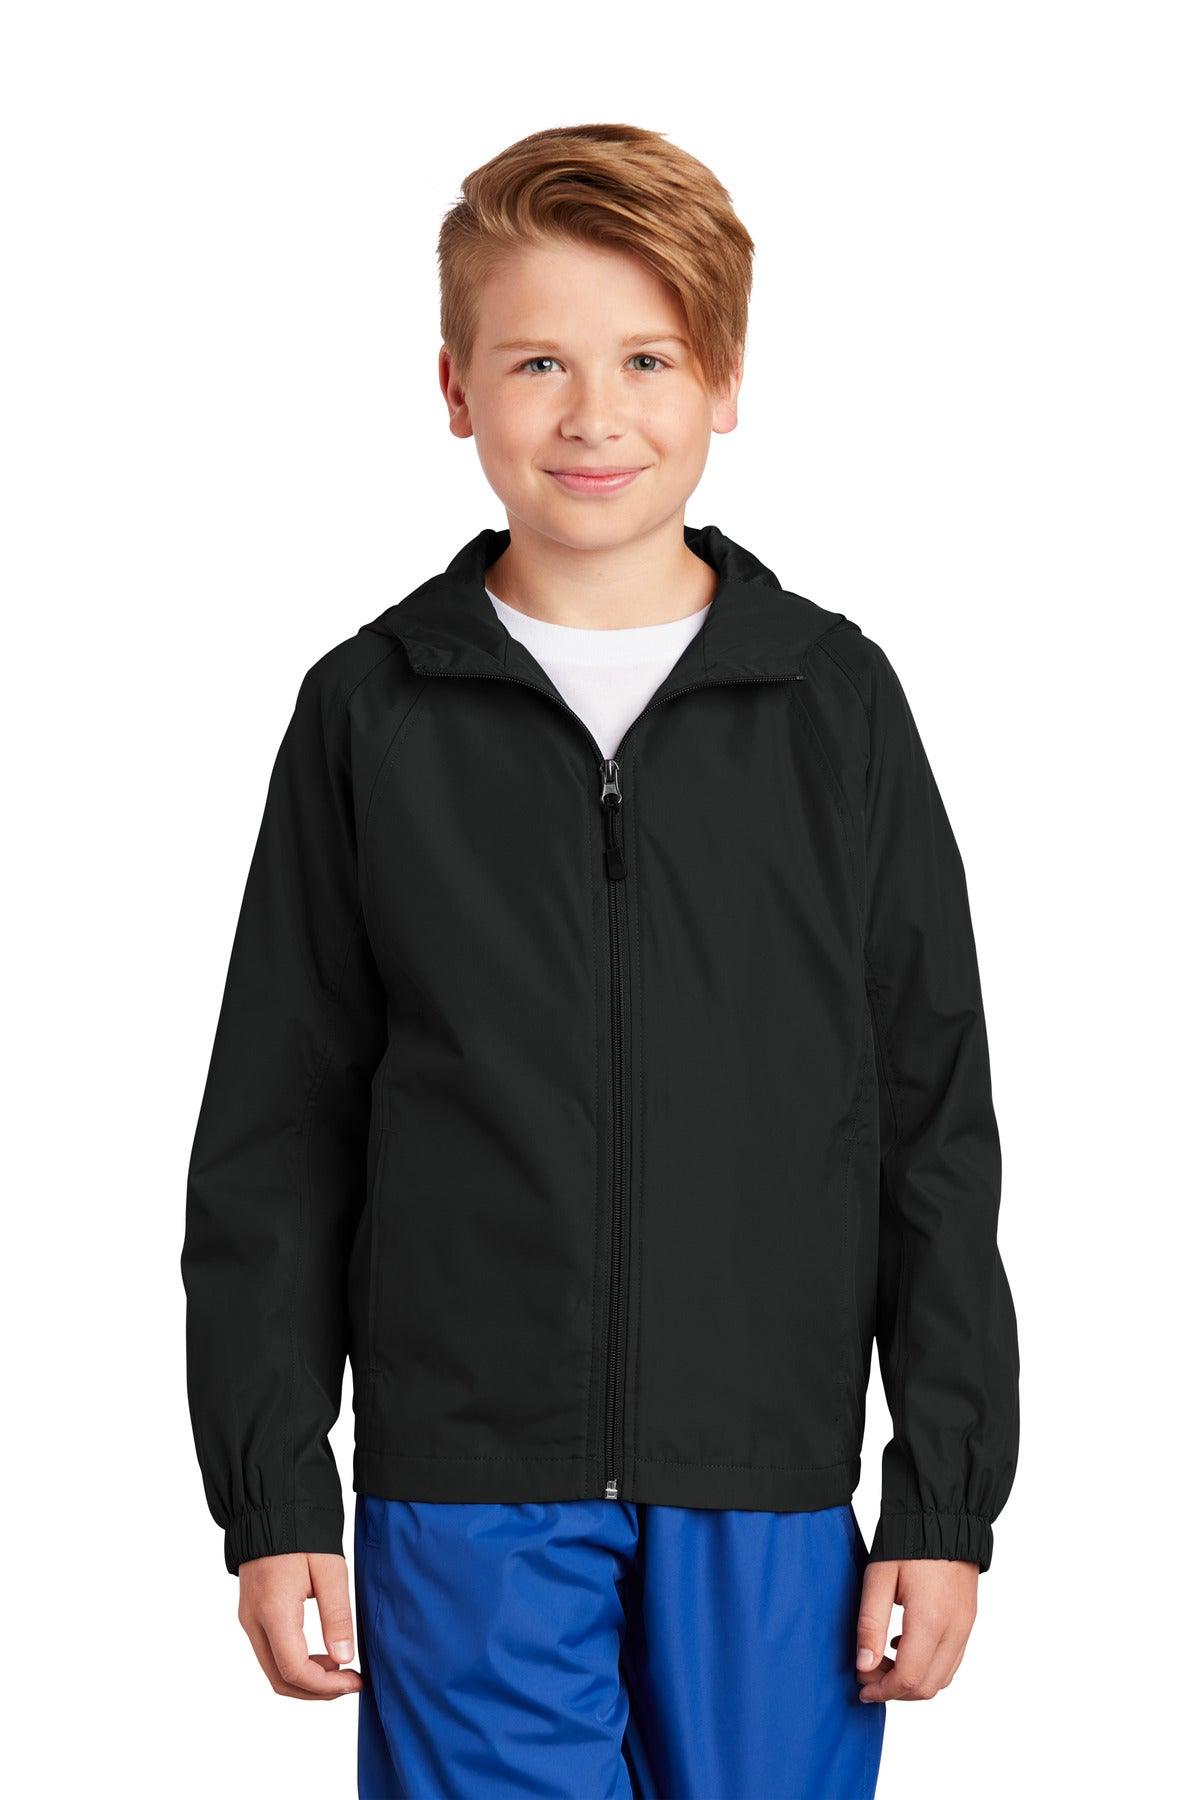 Sport-Tek Youth Hooded Raglan Jacket. YST73 - Dresses Max